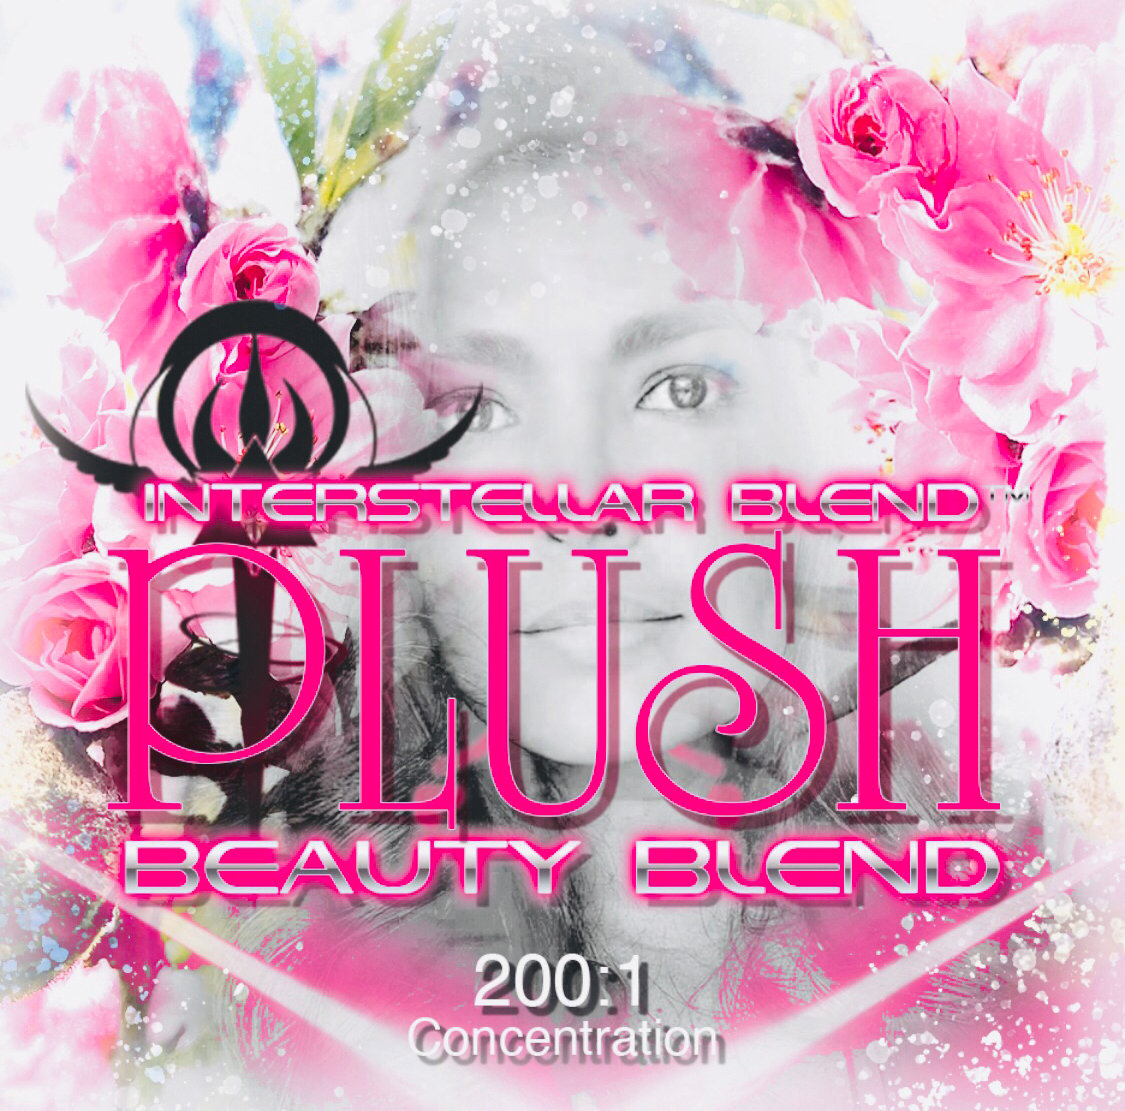 PLUSH 'BEAUTY BLEND' : Youthful Skin Restoration / Ultimate Anti Wrinkle Agent 200:1